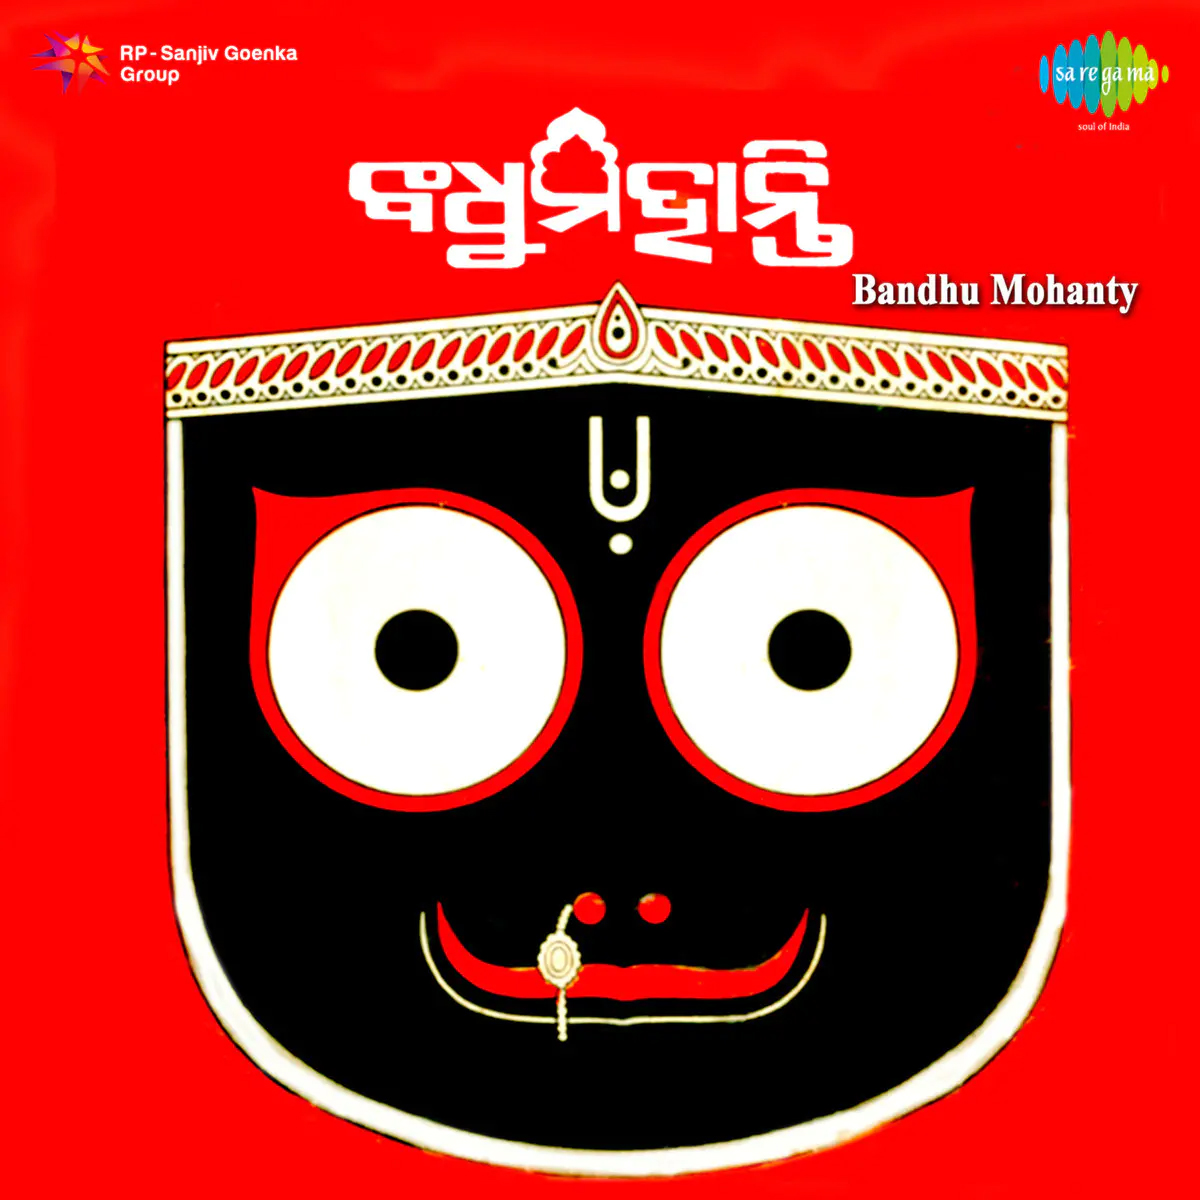 'Bandhu Mohanty' audio artwork